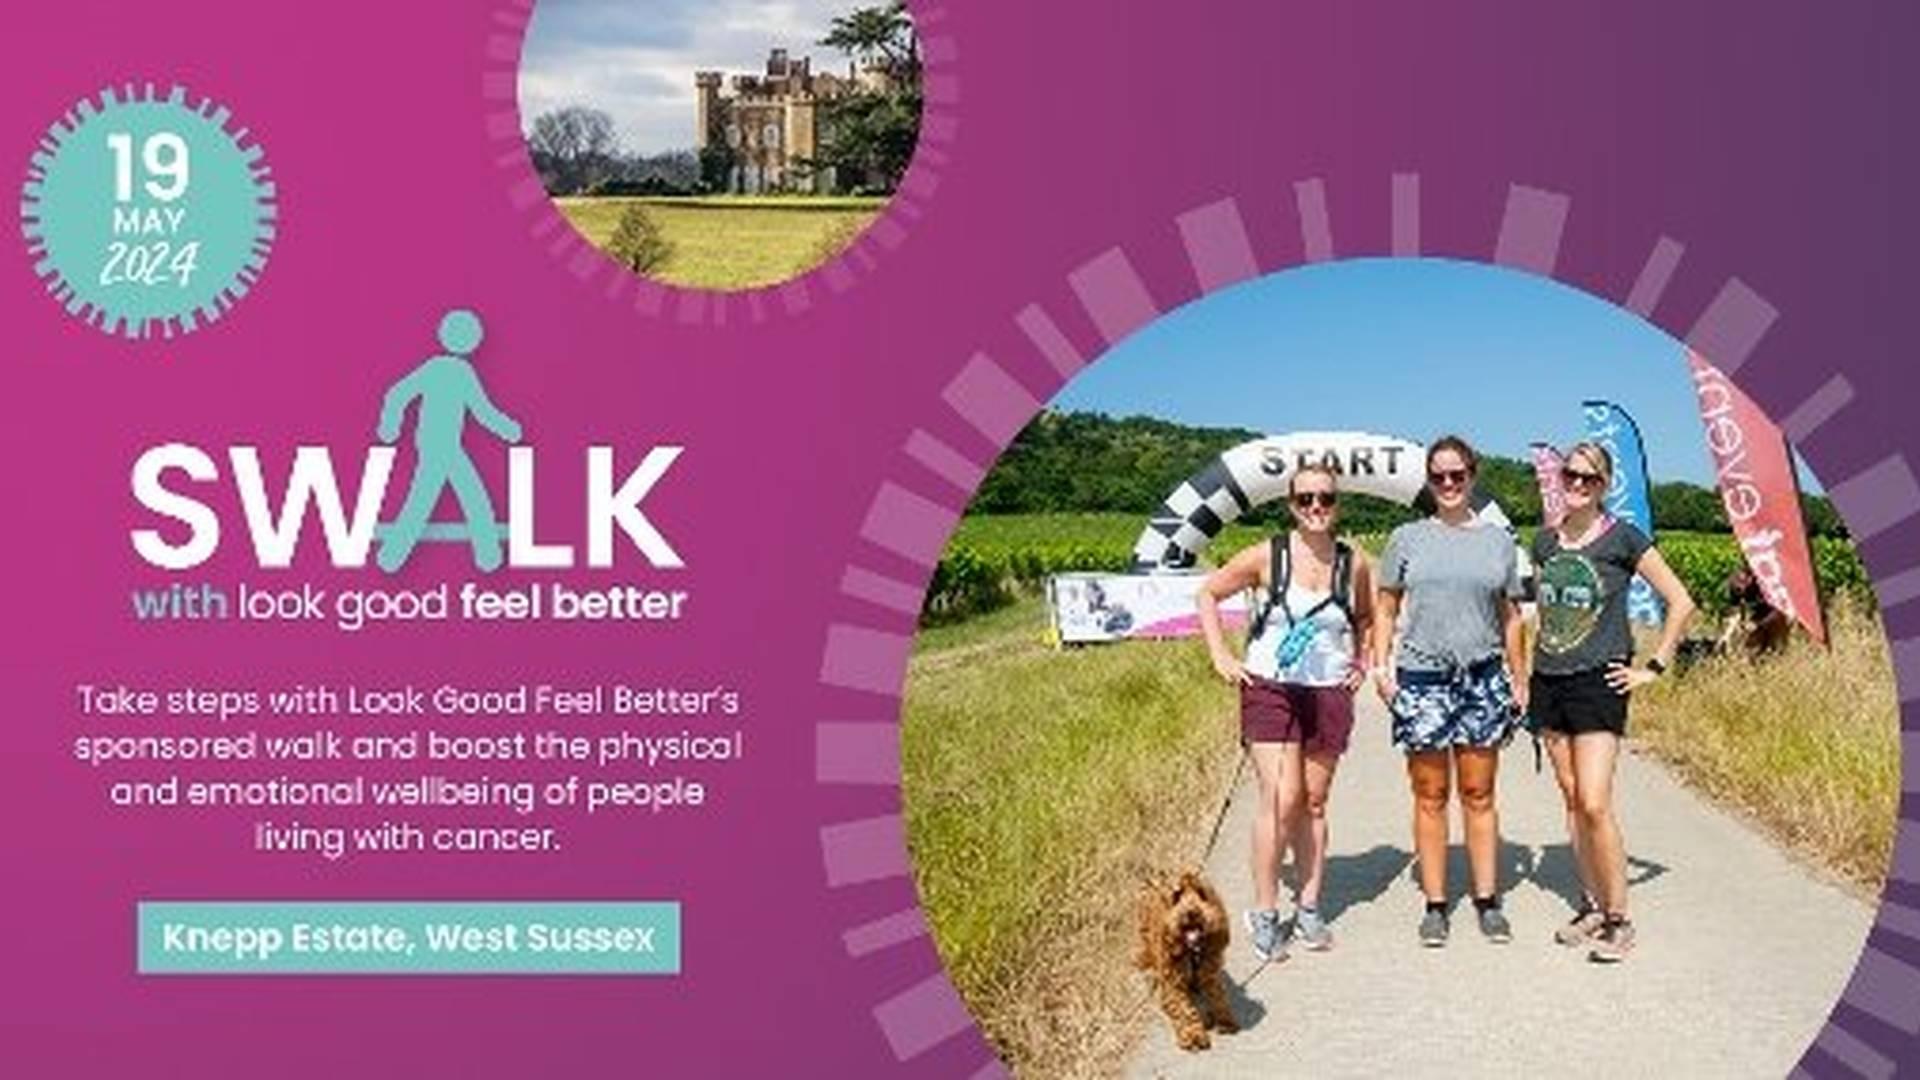 SWALK - Sponsored Walk with Look Good Feel Better photo